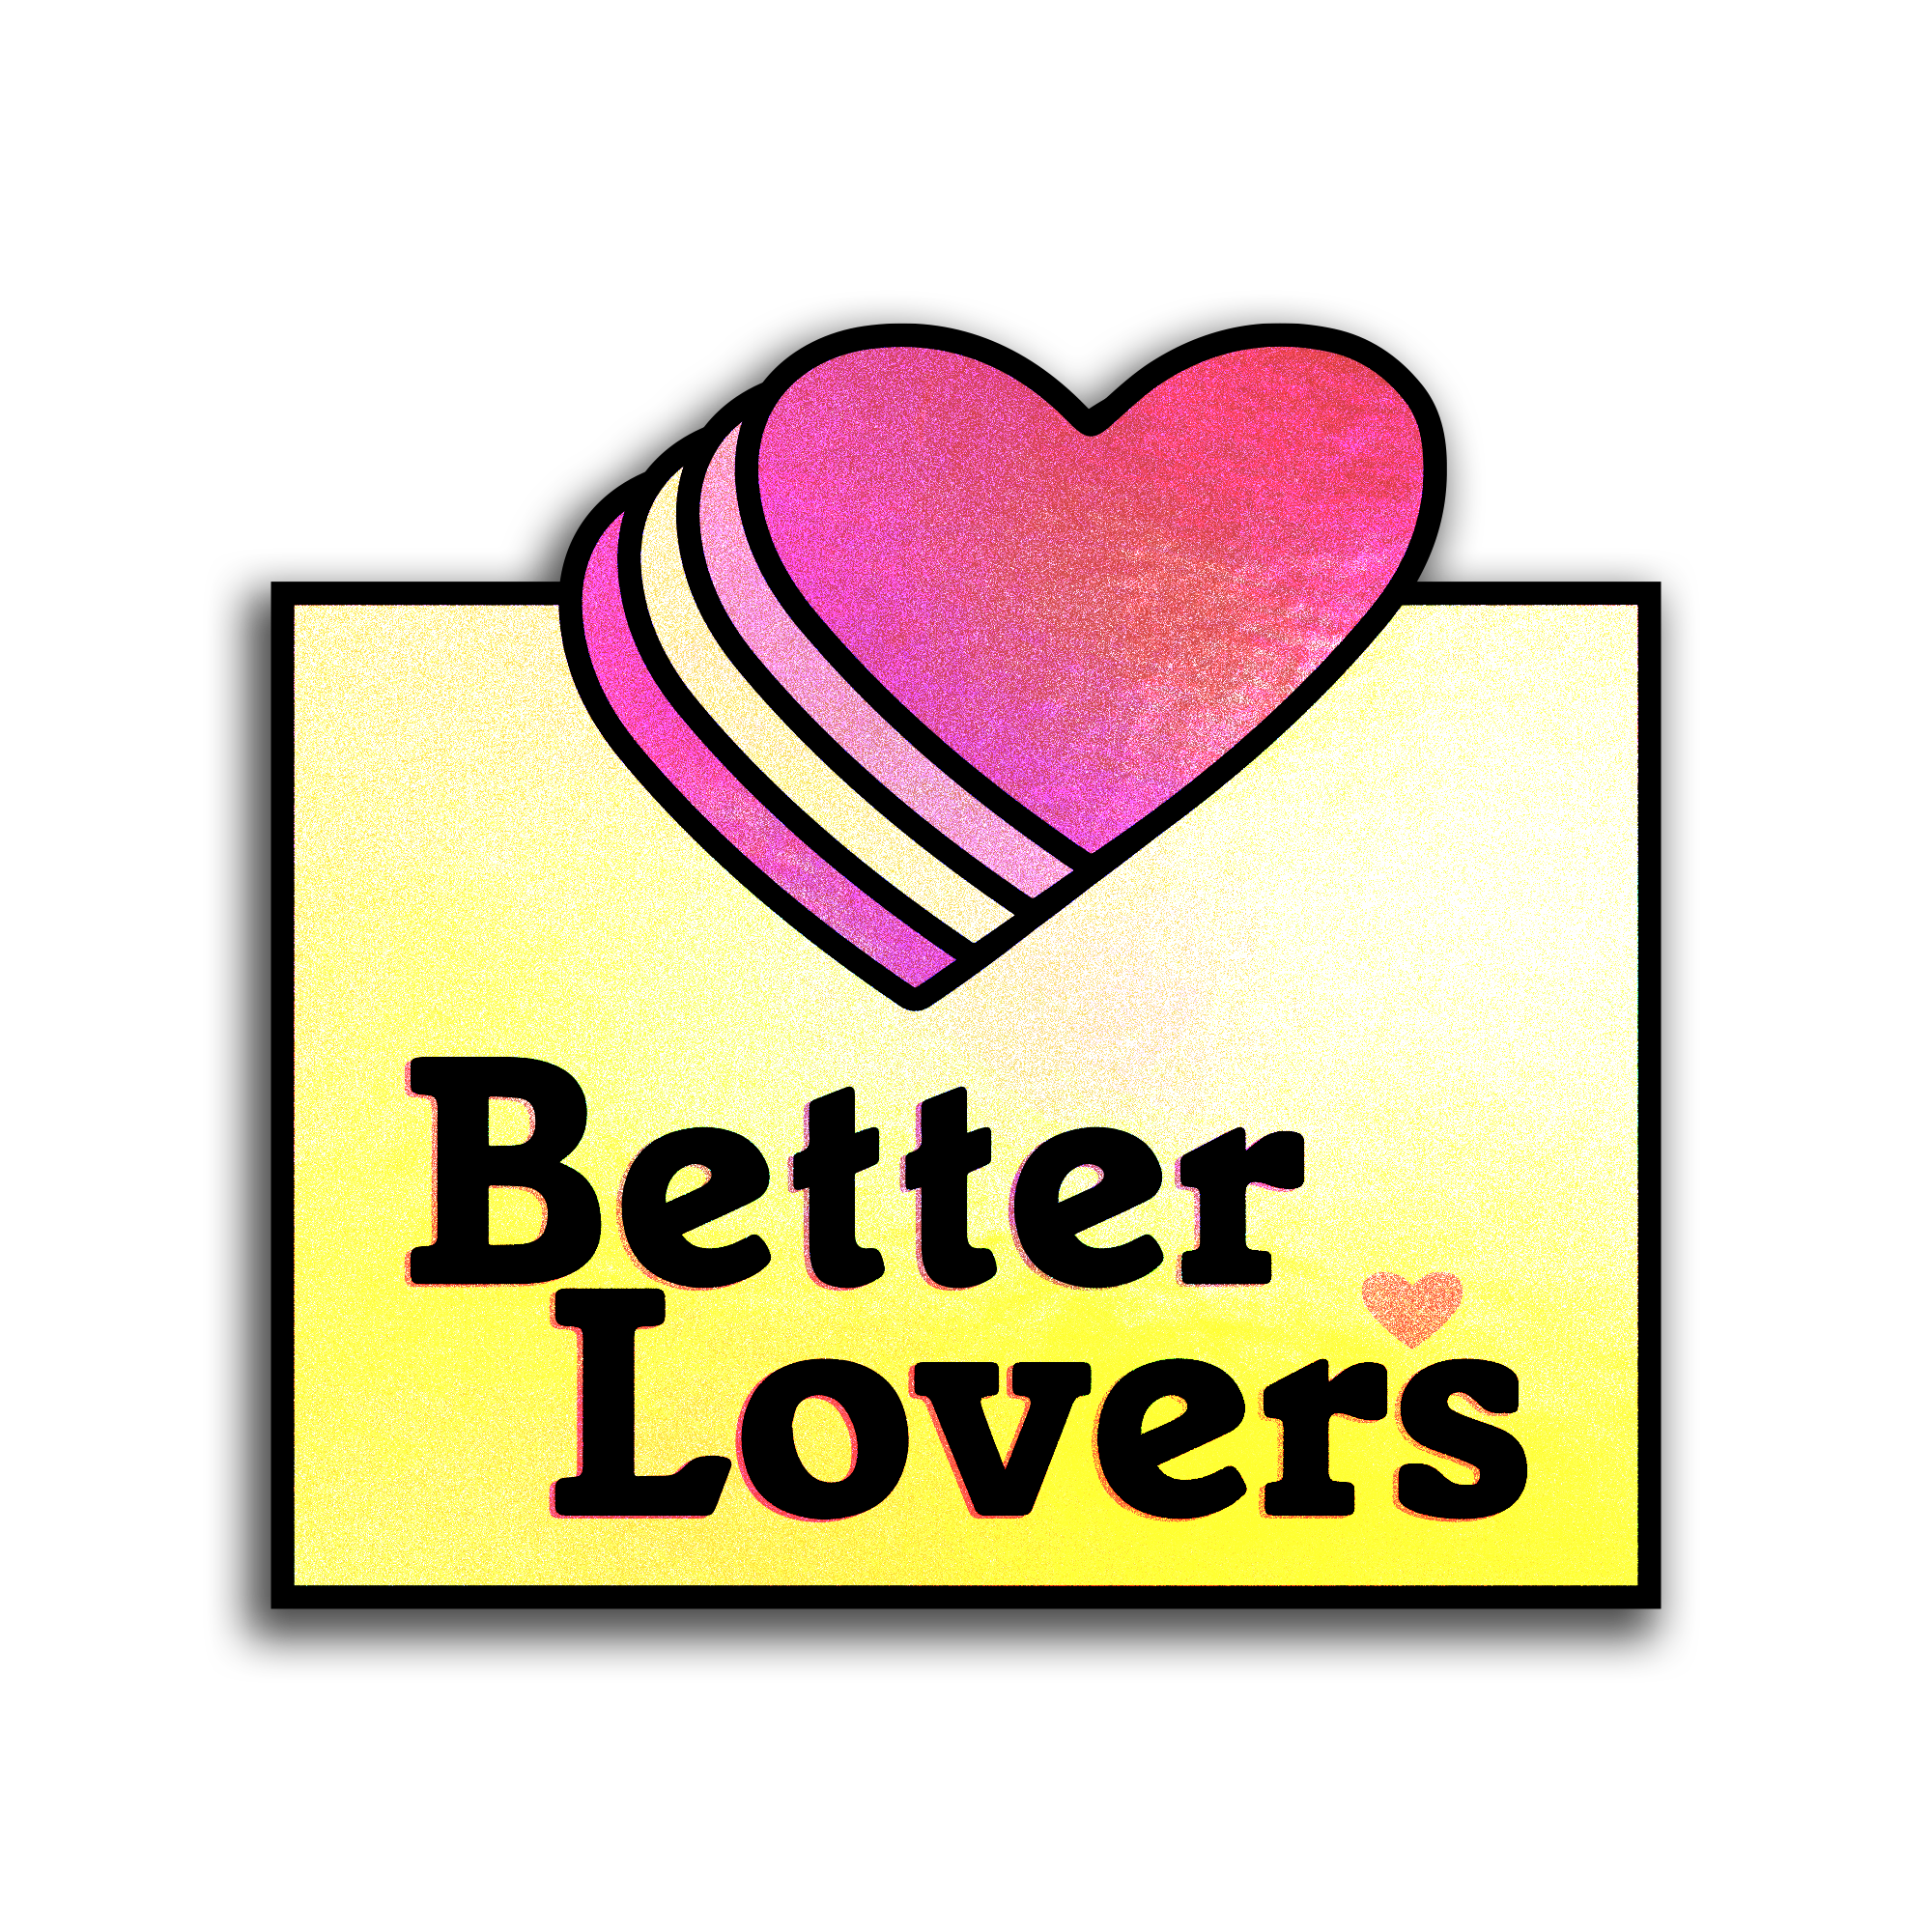 Better Lovers - Loves Holographic Sticker (Pre-Order)